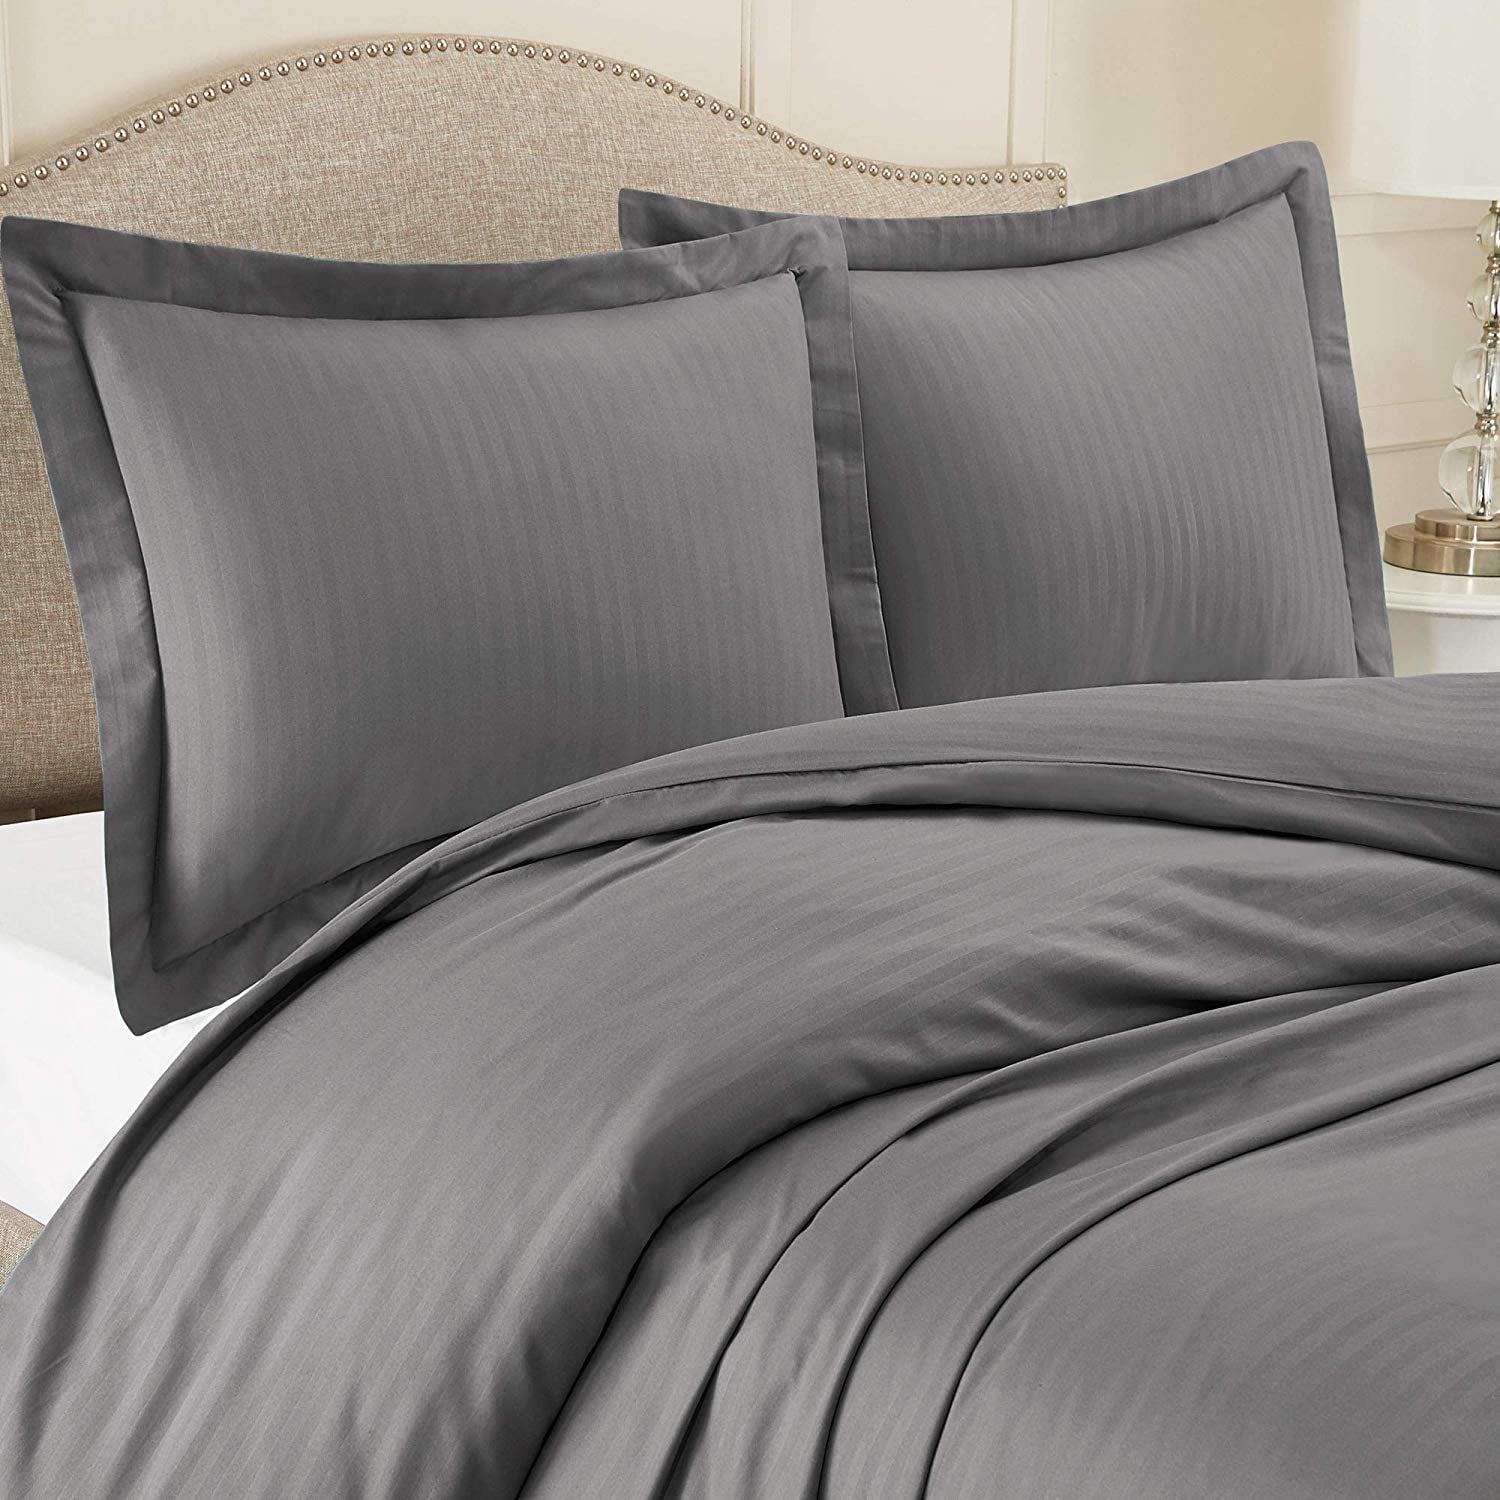 Gray Cal King Duvet Cover Set Soft Brushed Comforter Cover W/Pillow Sham 